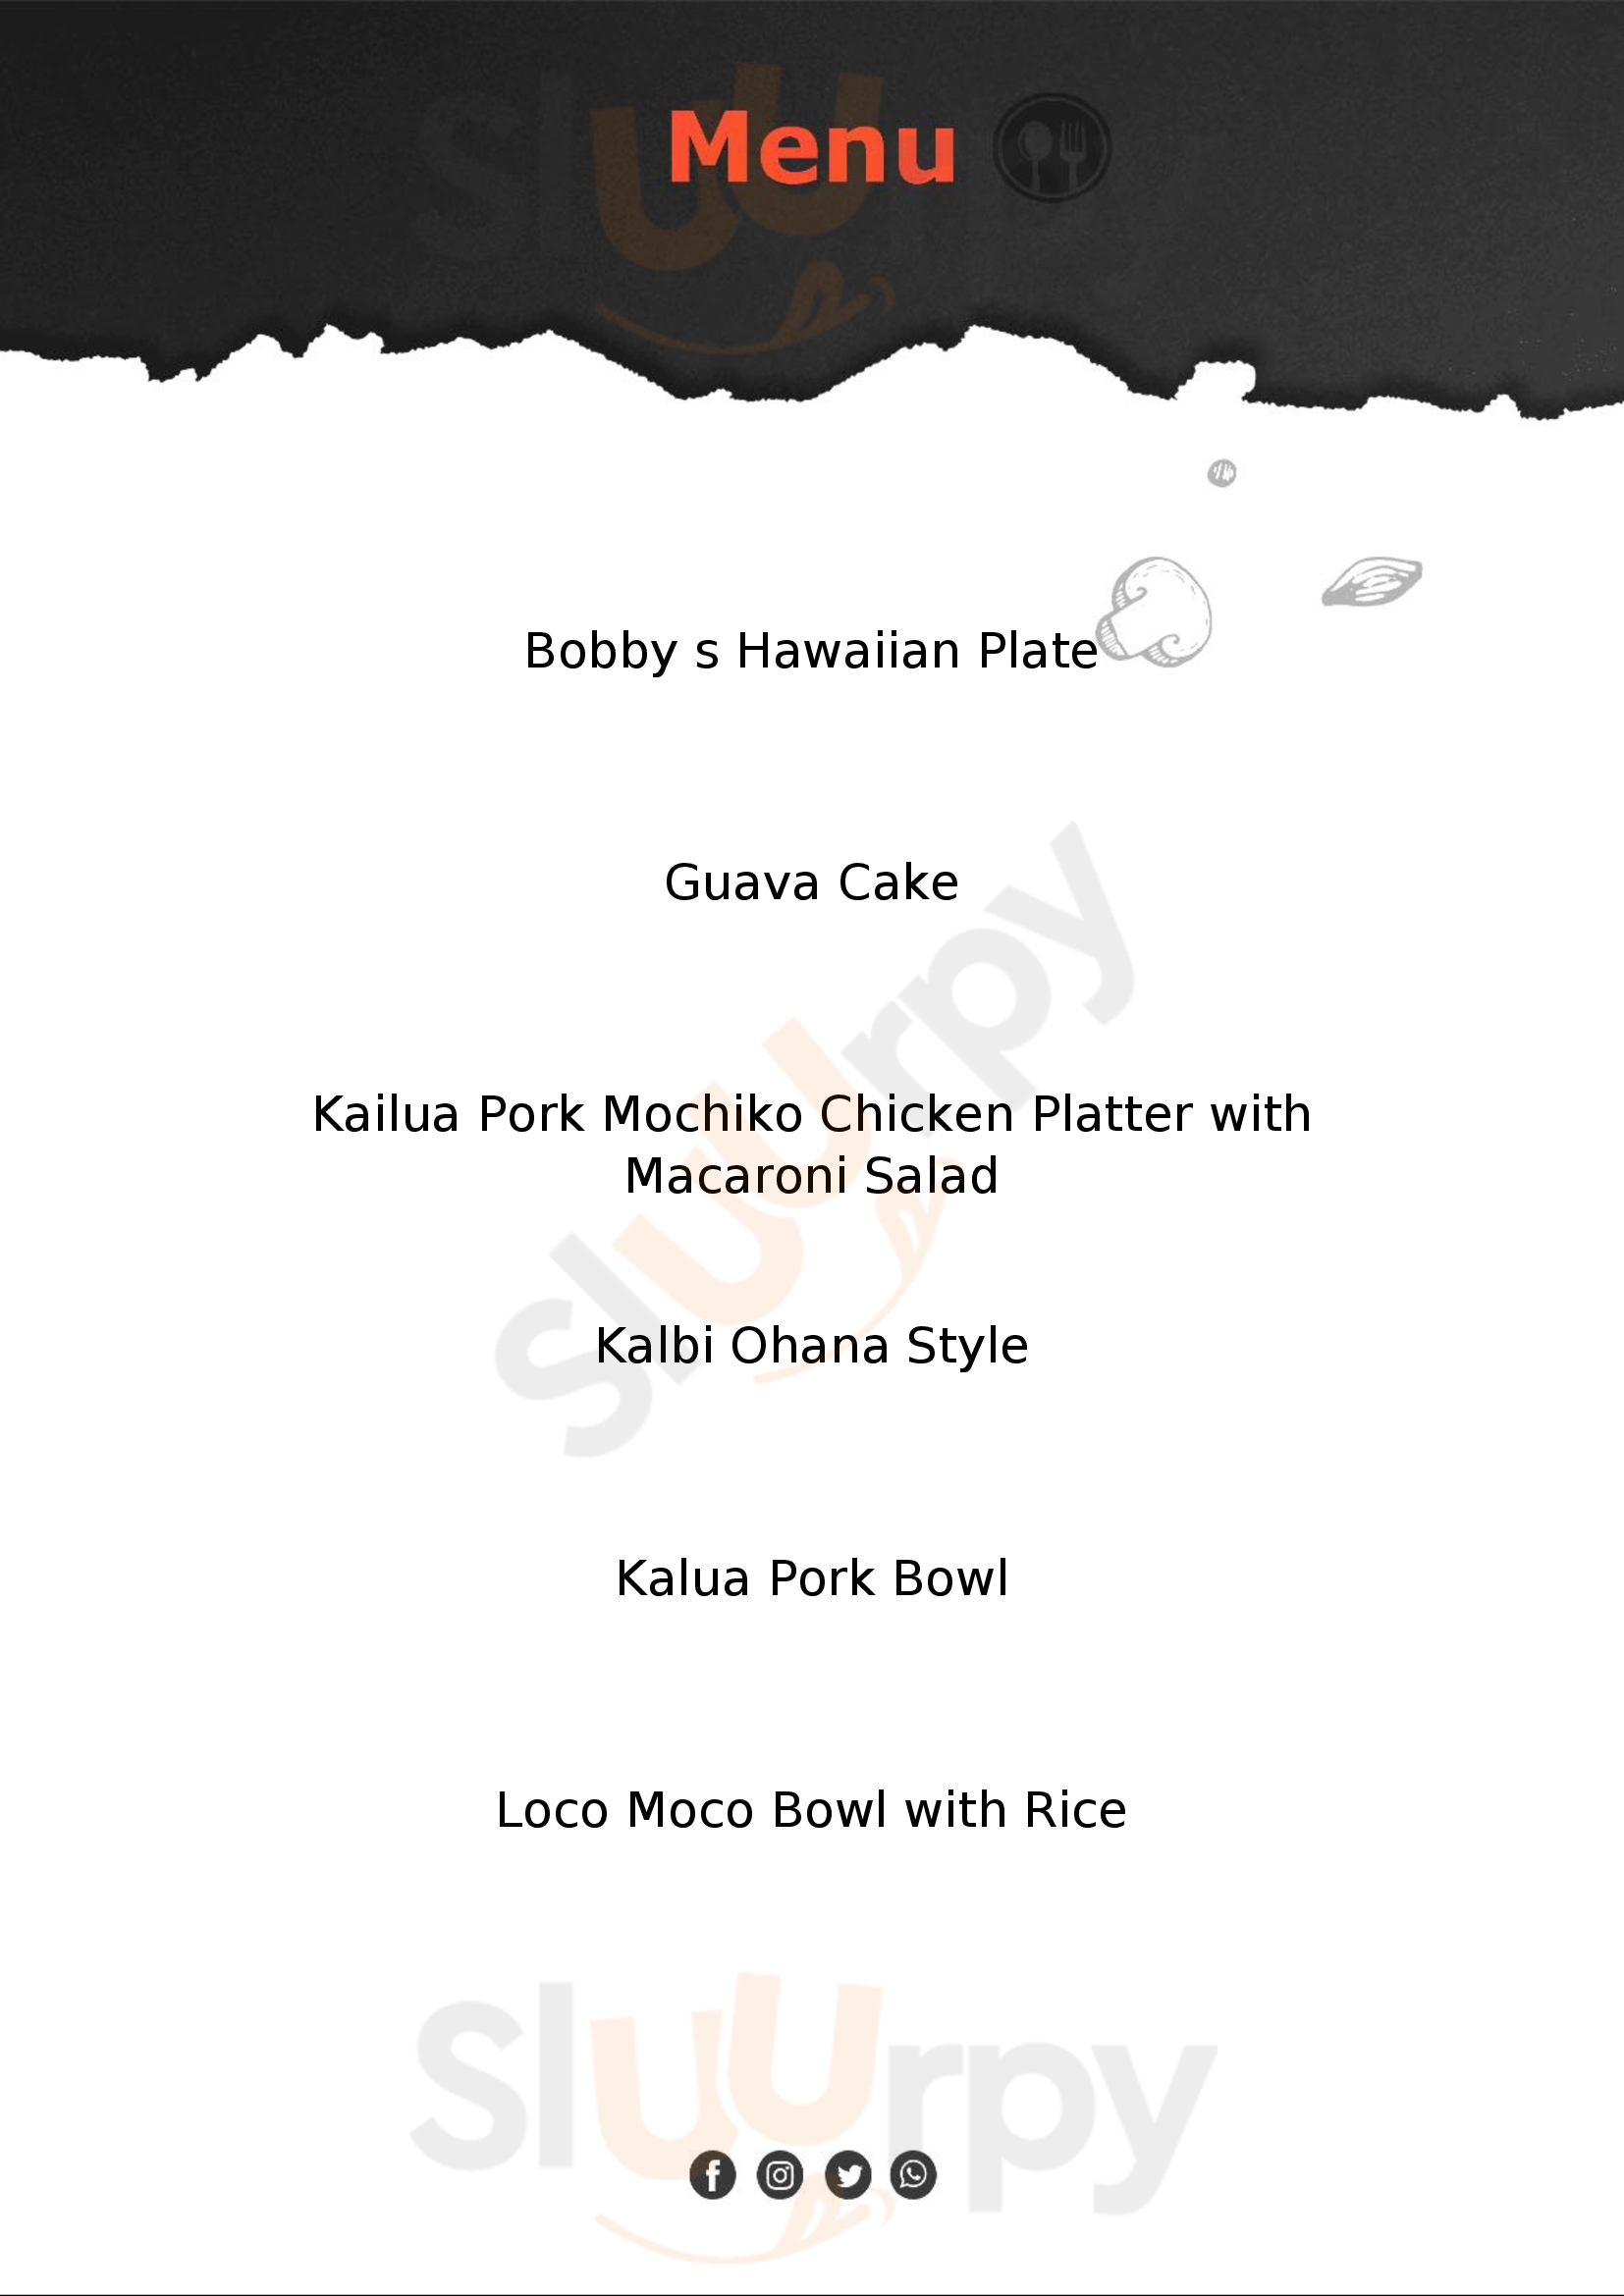 Bobby's Hawaiian Restaurant Everett Menu - 1